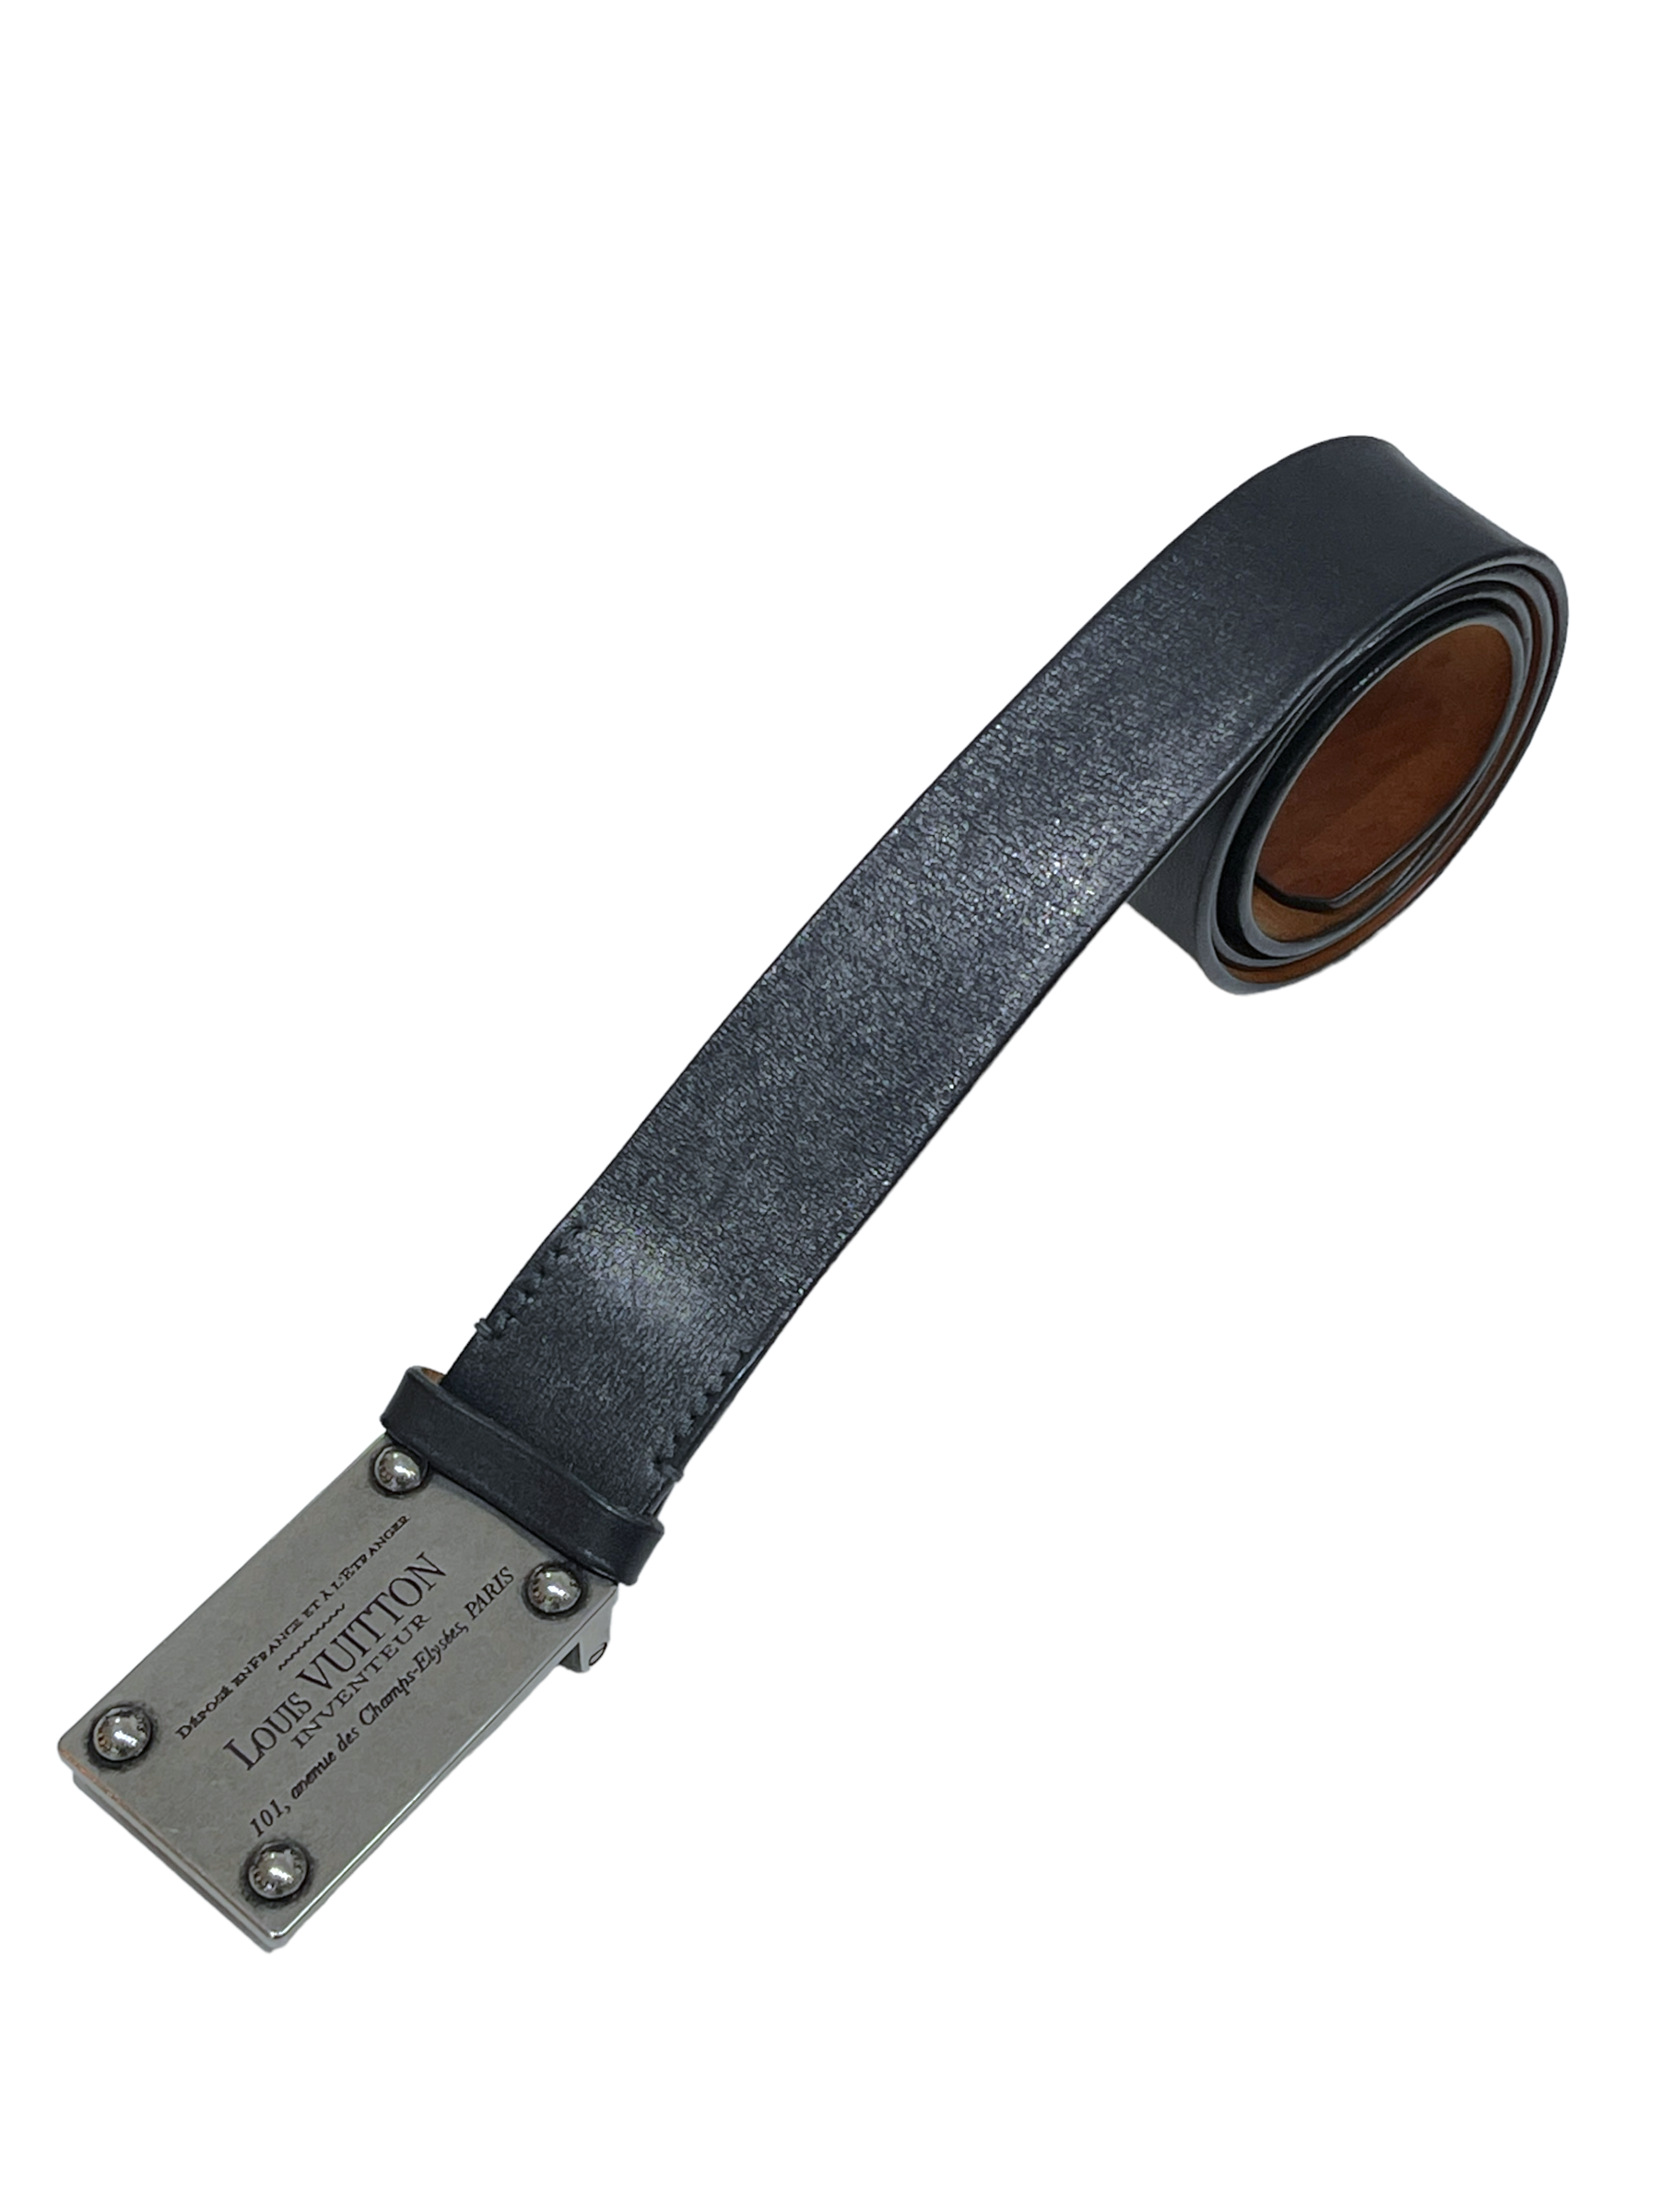 Louis Vuitton Vintage - Utah Inventeur Belt - Black Gold - Leather Belt -  Luxury High Quality